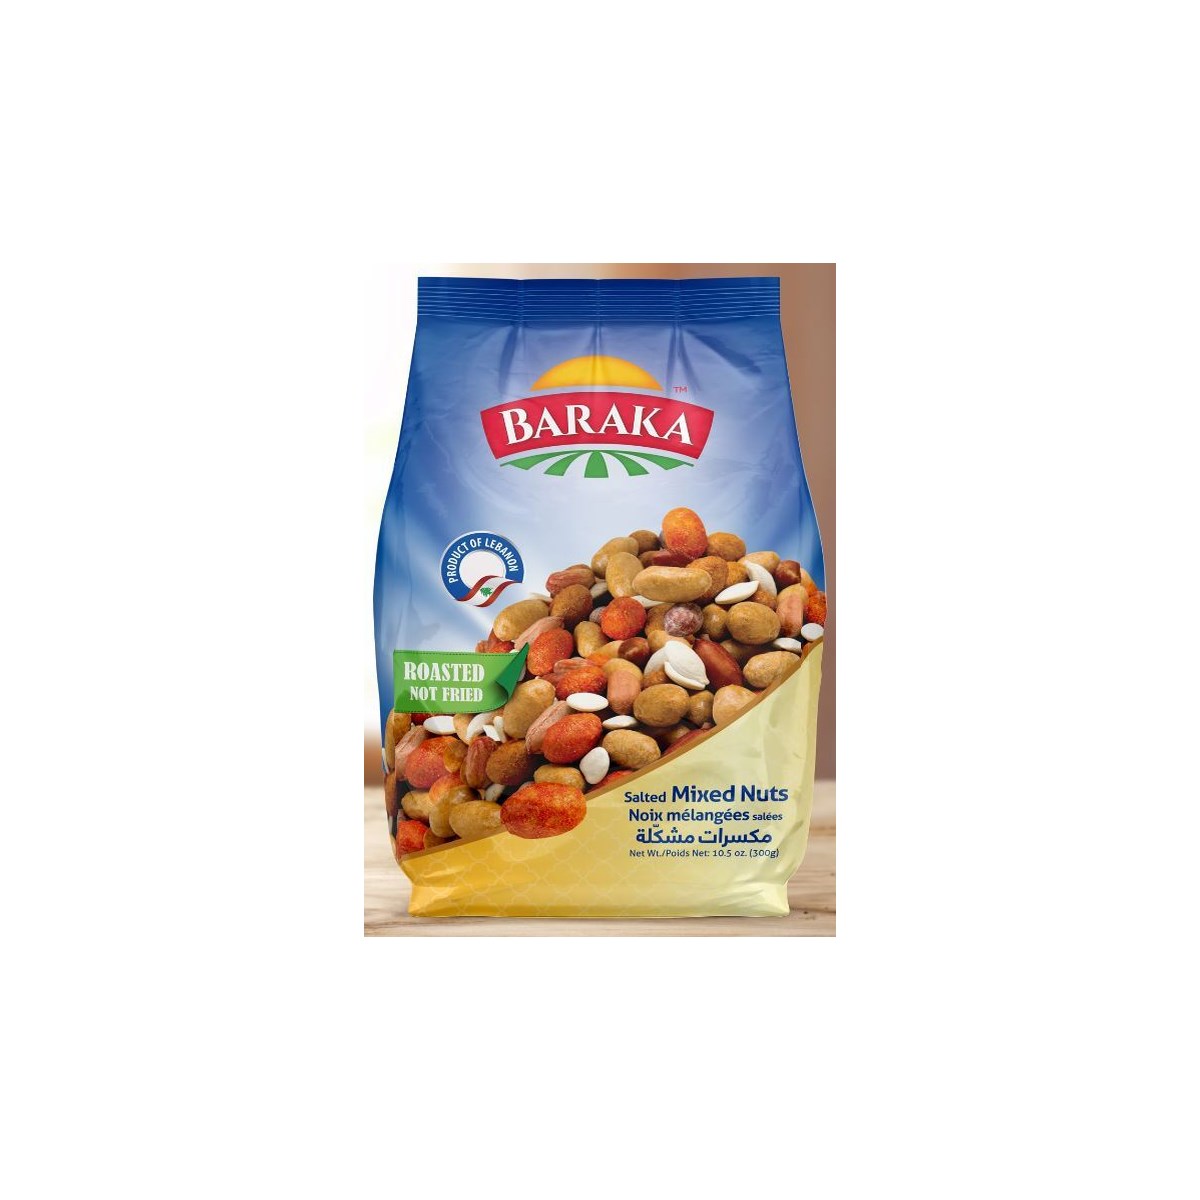 Regular Mix nuts bags "Baraka" 300g * 12